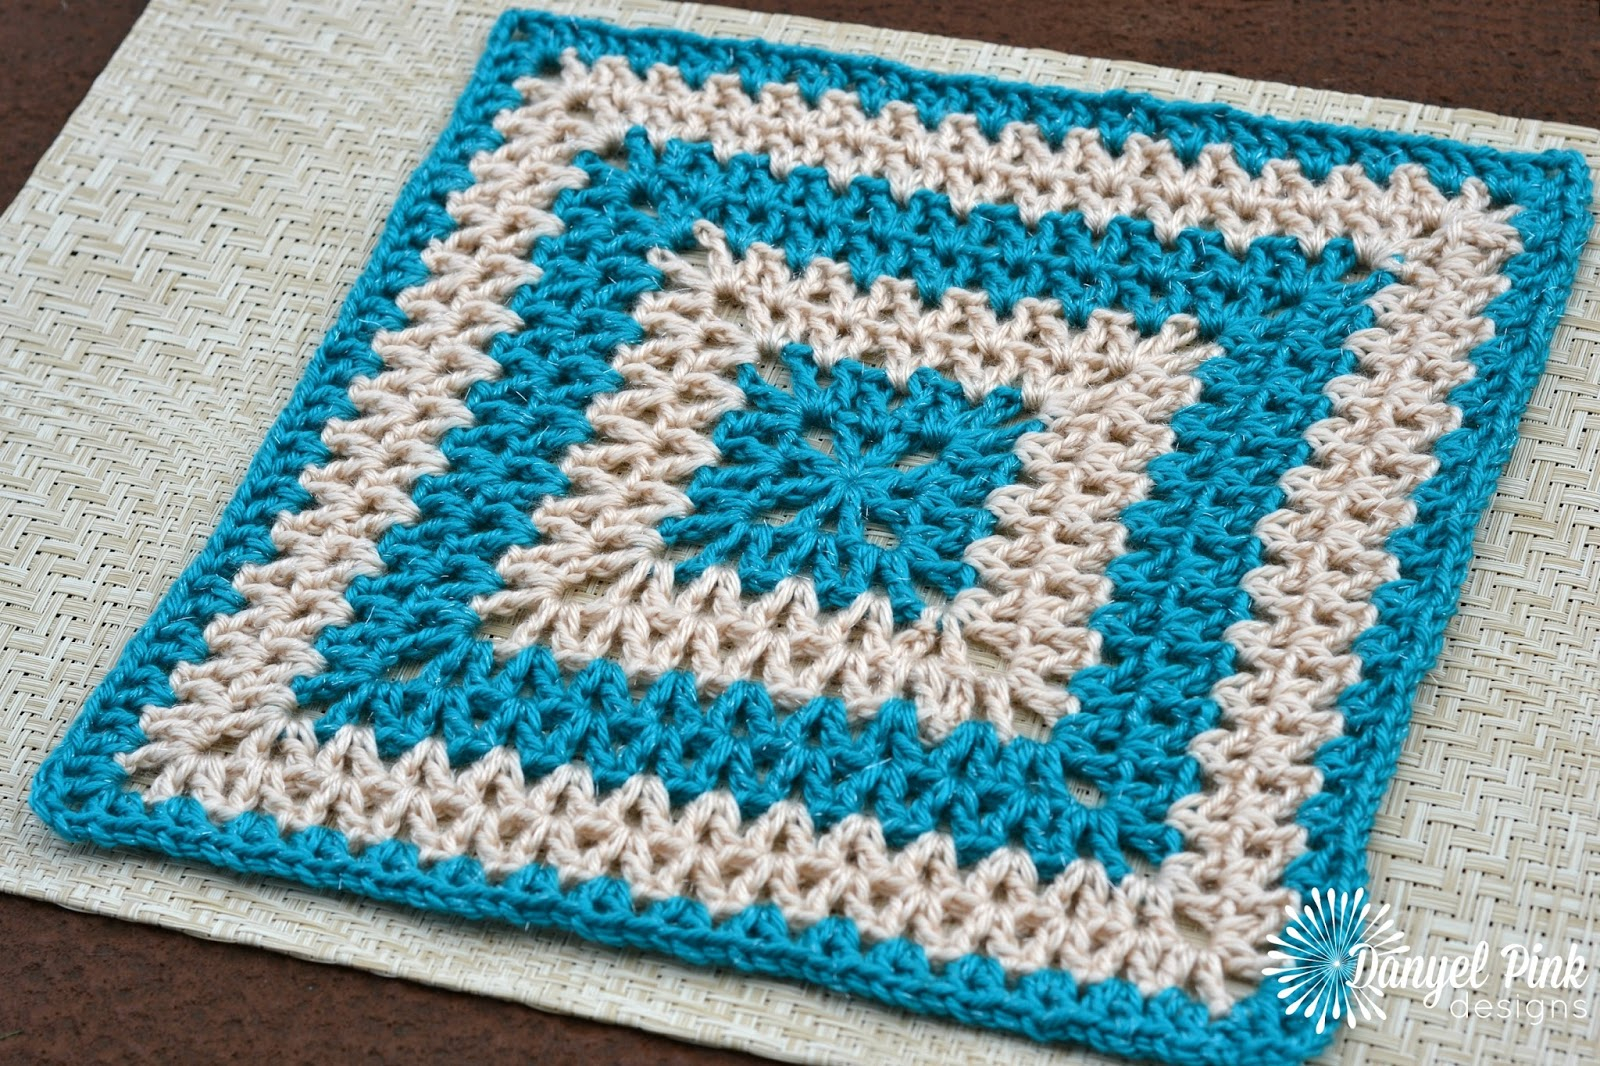 12 Granny Square Crochet Pattern Danyel Pink Designs Crochet Pattern Vibrant V Stitch Square